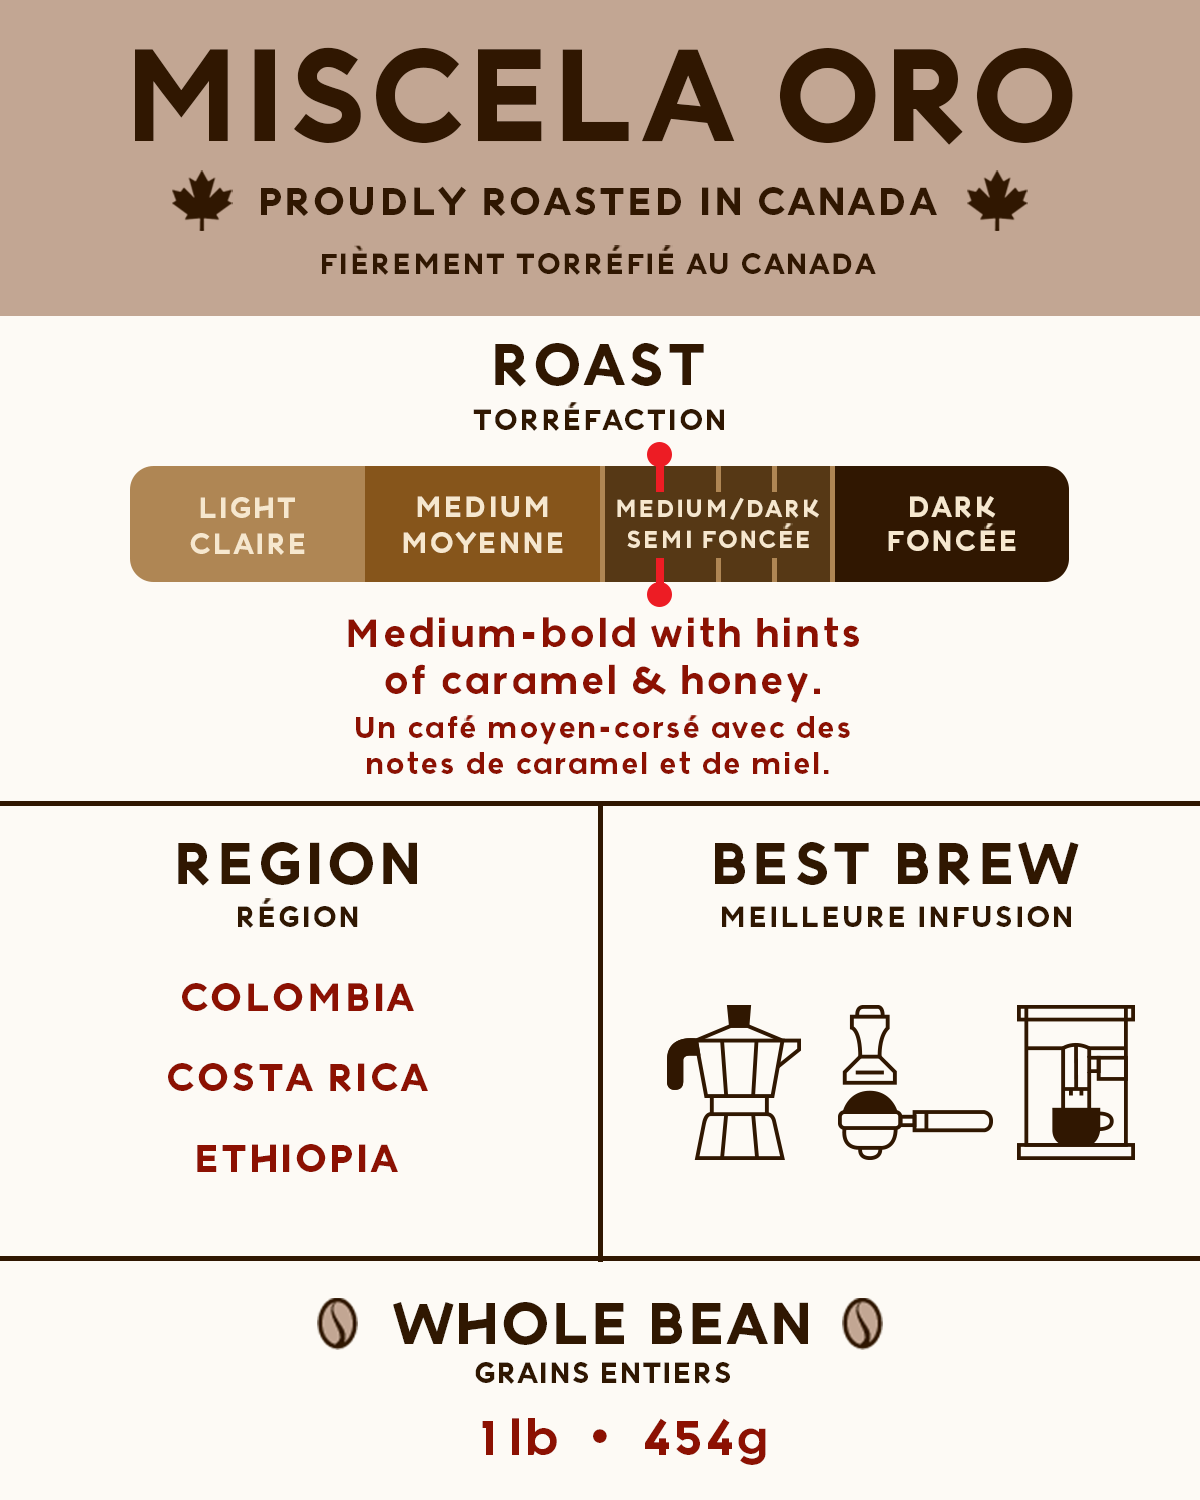 Miscela Oro Coffee Beans Label from Espresso Canada